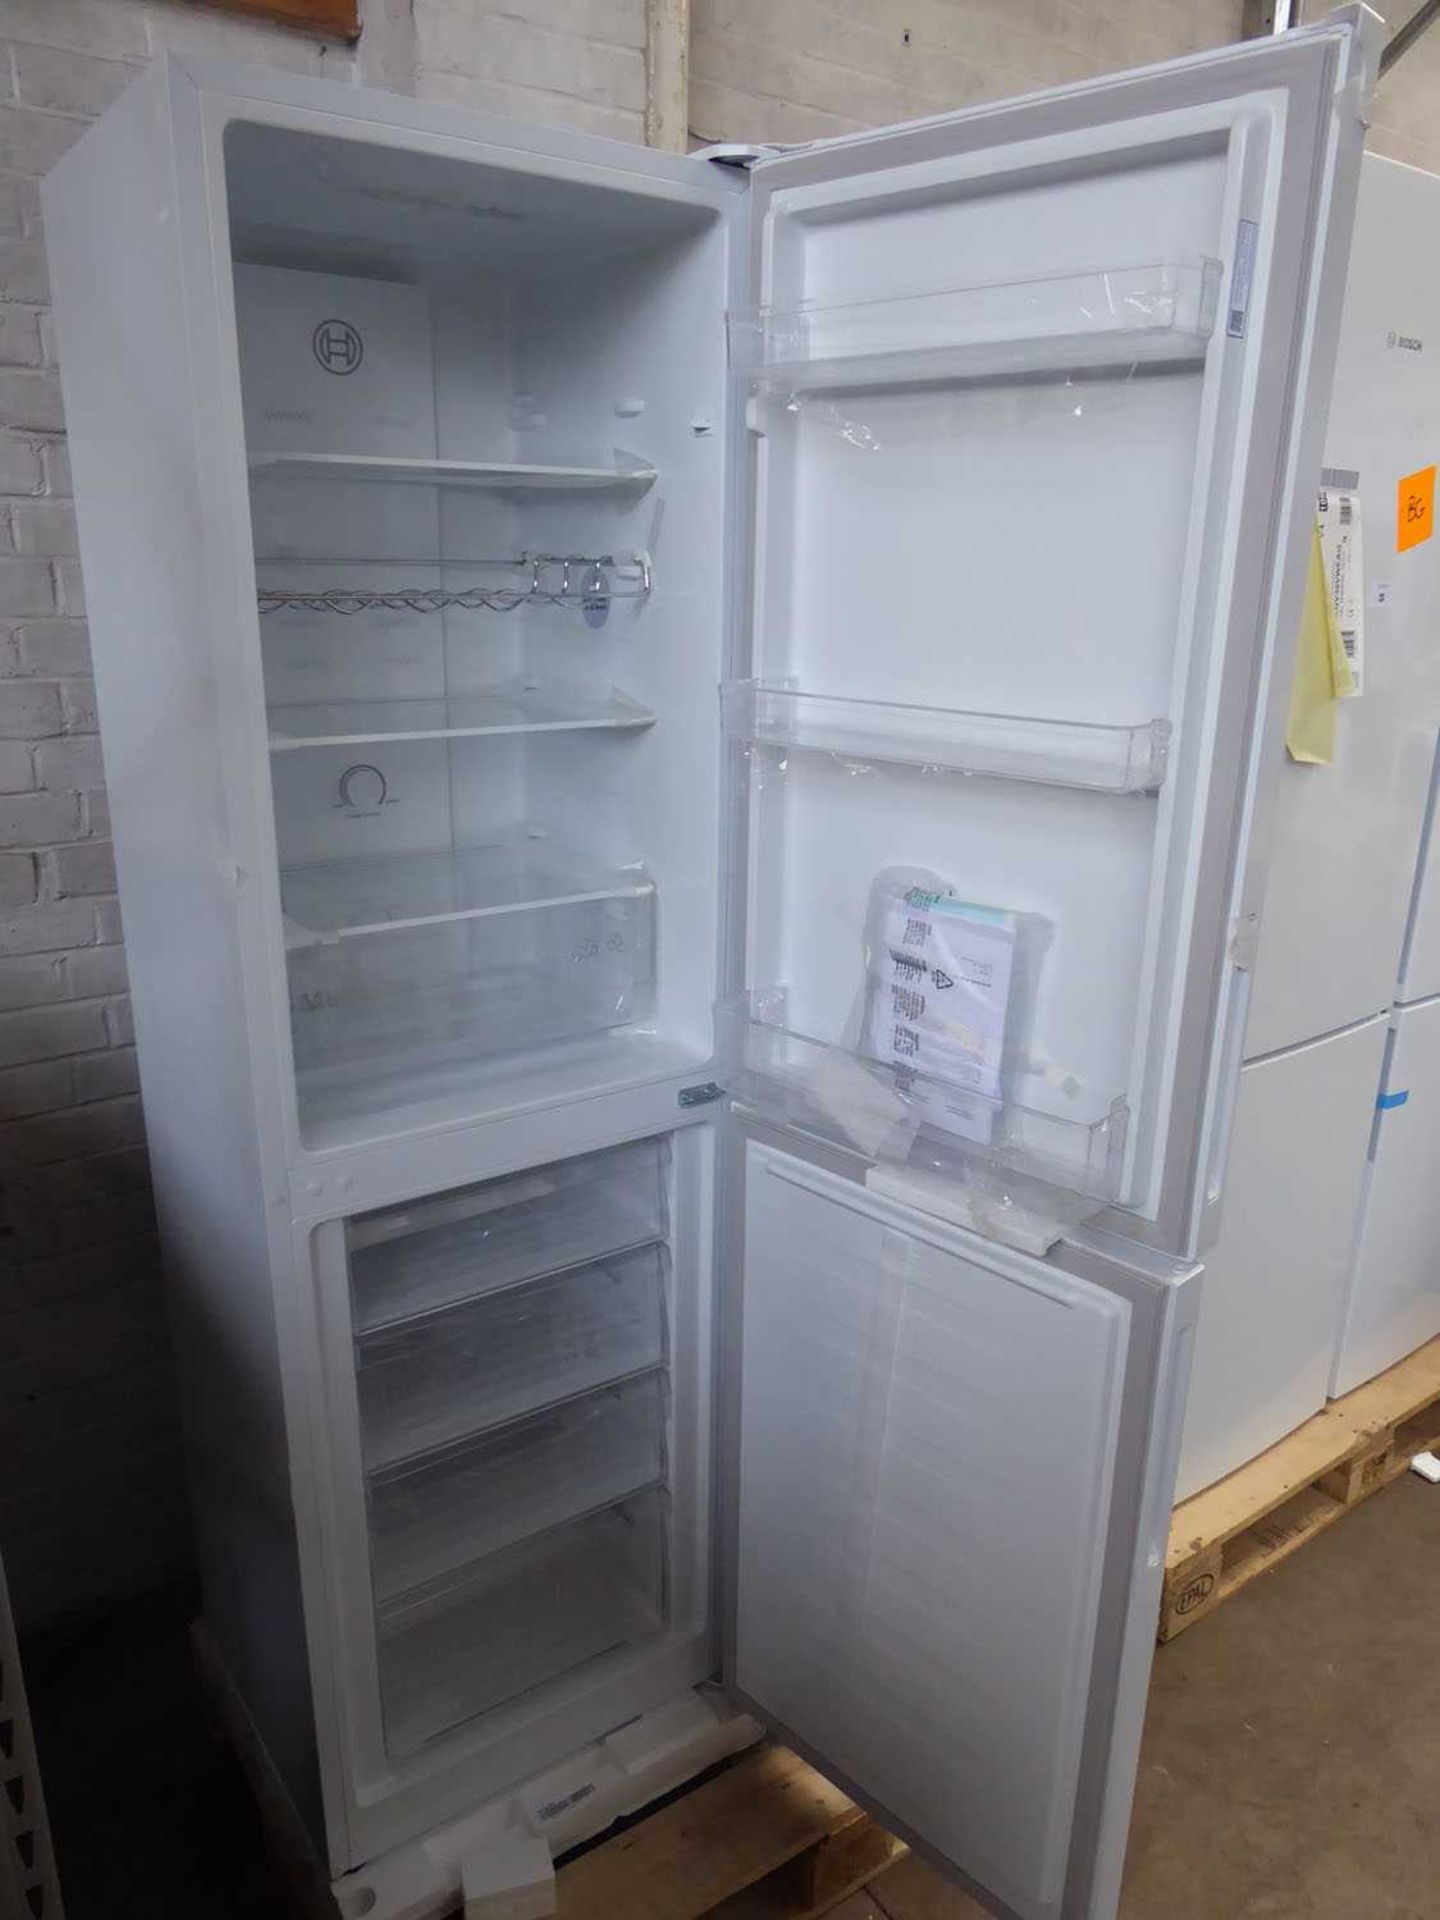 +VAT KGN27NWFAGB Bosch Free-standing fridge-freezer - Image 2 of 2